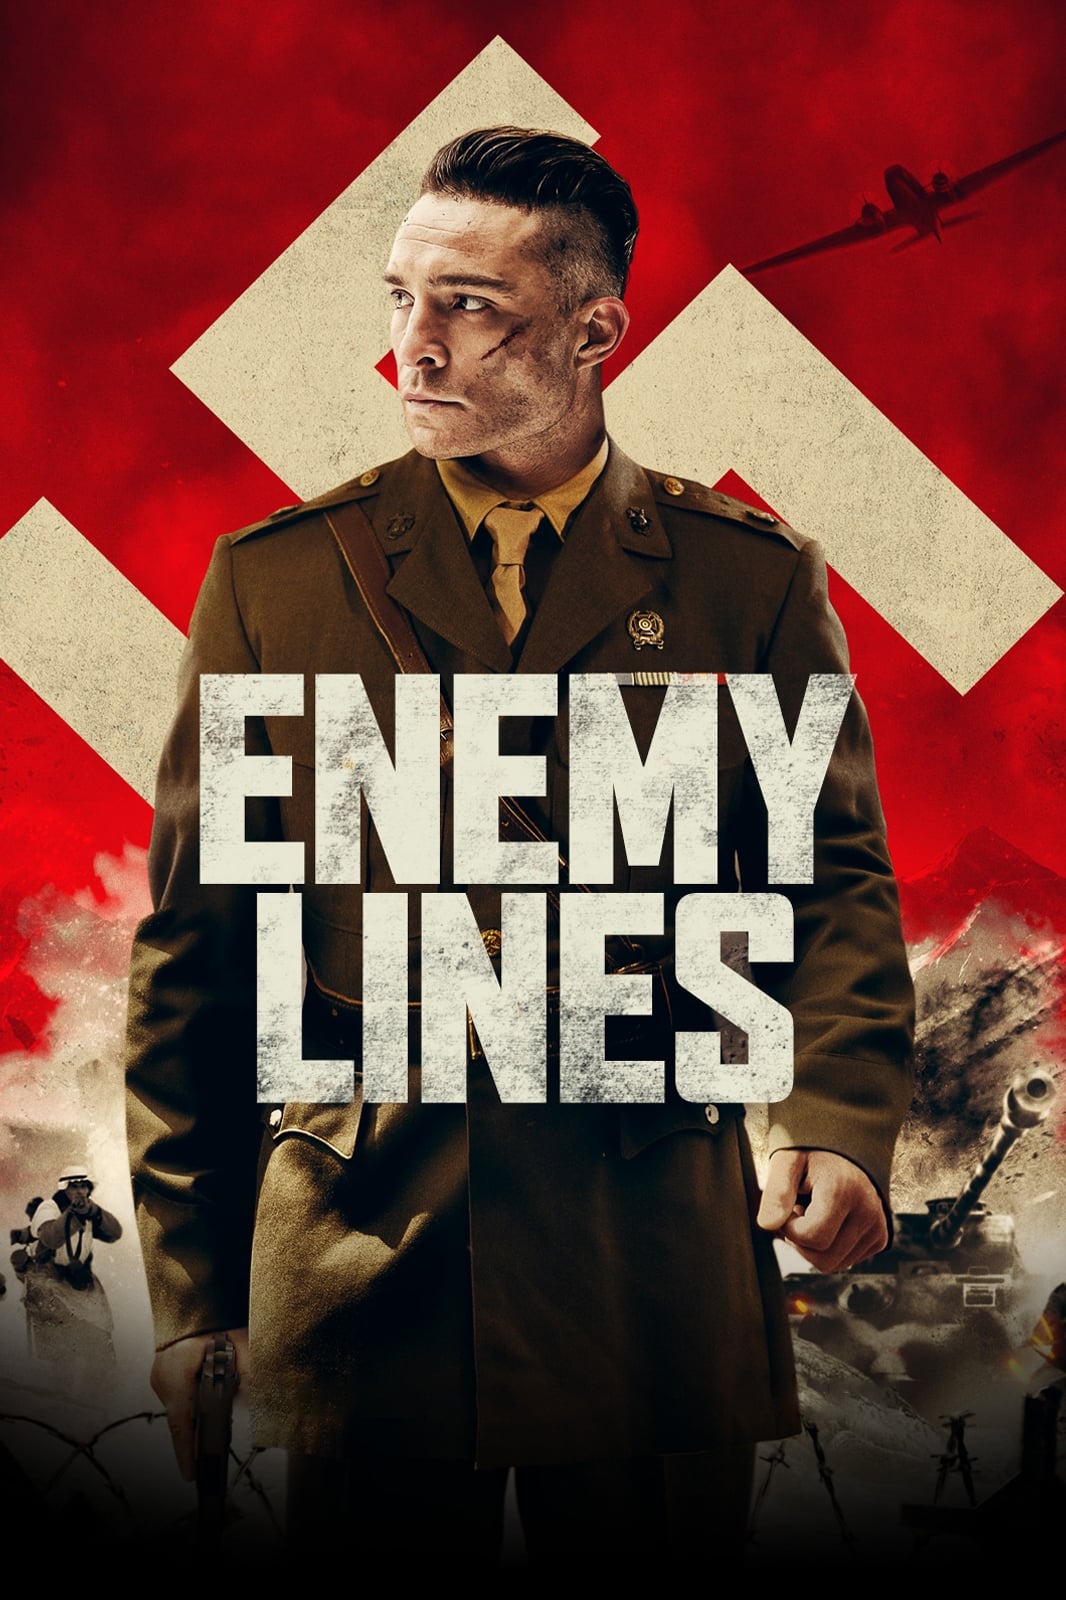 Enemy Lines (2020)